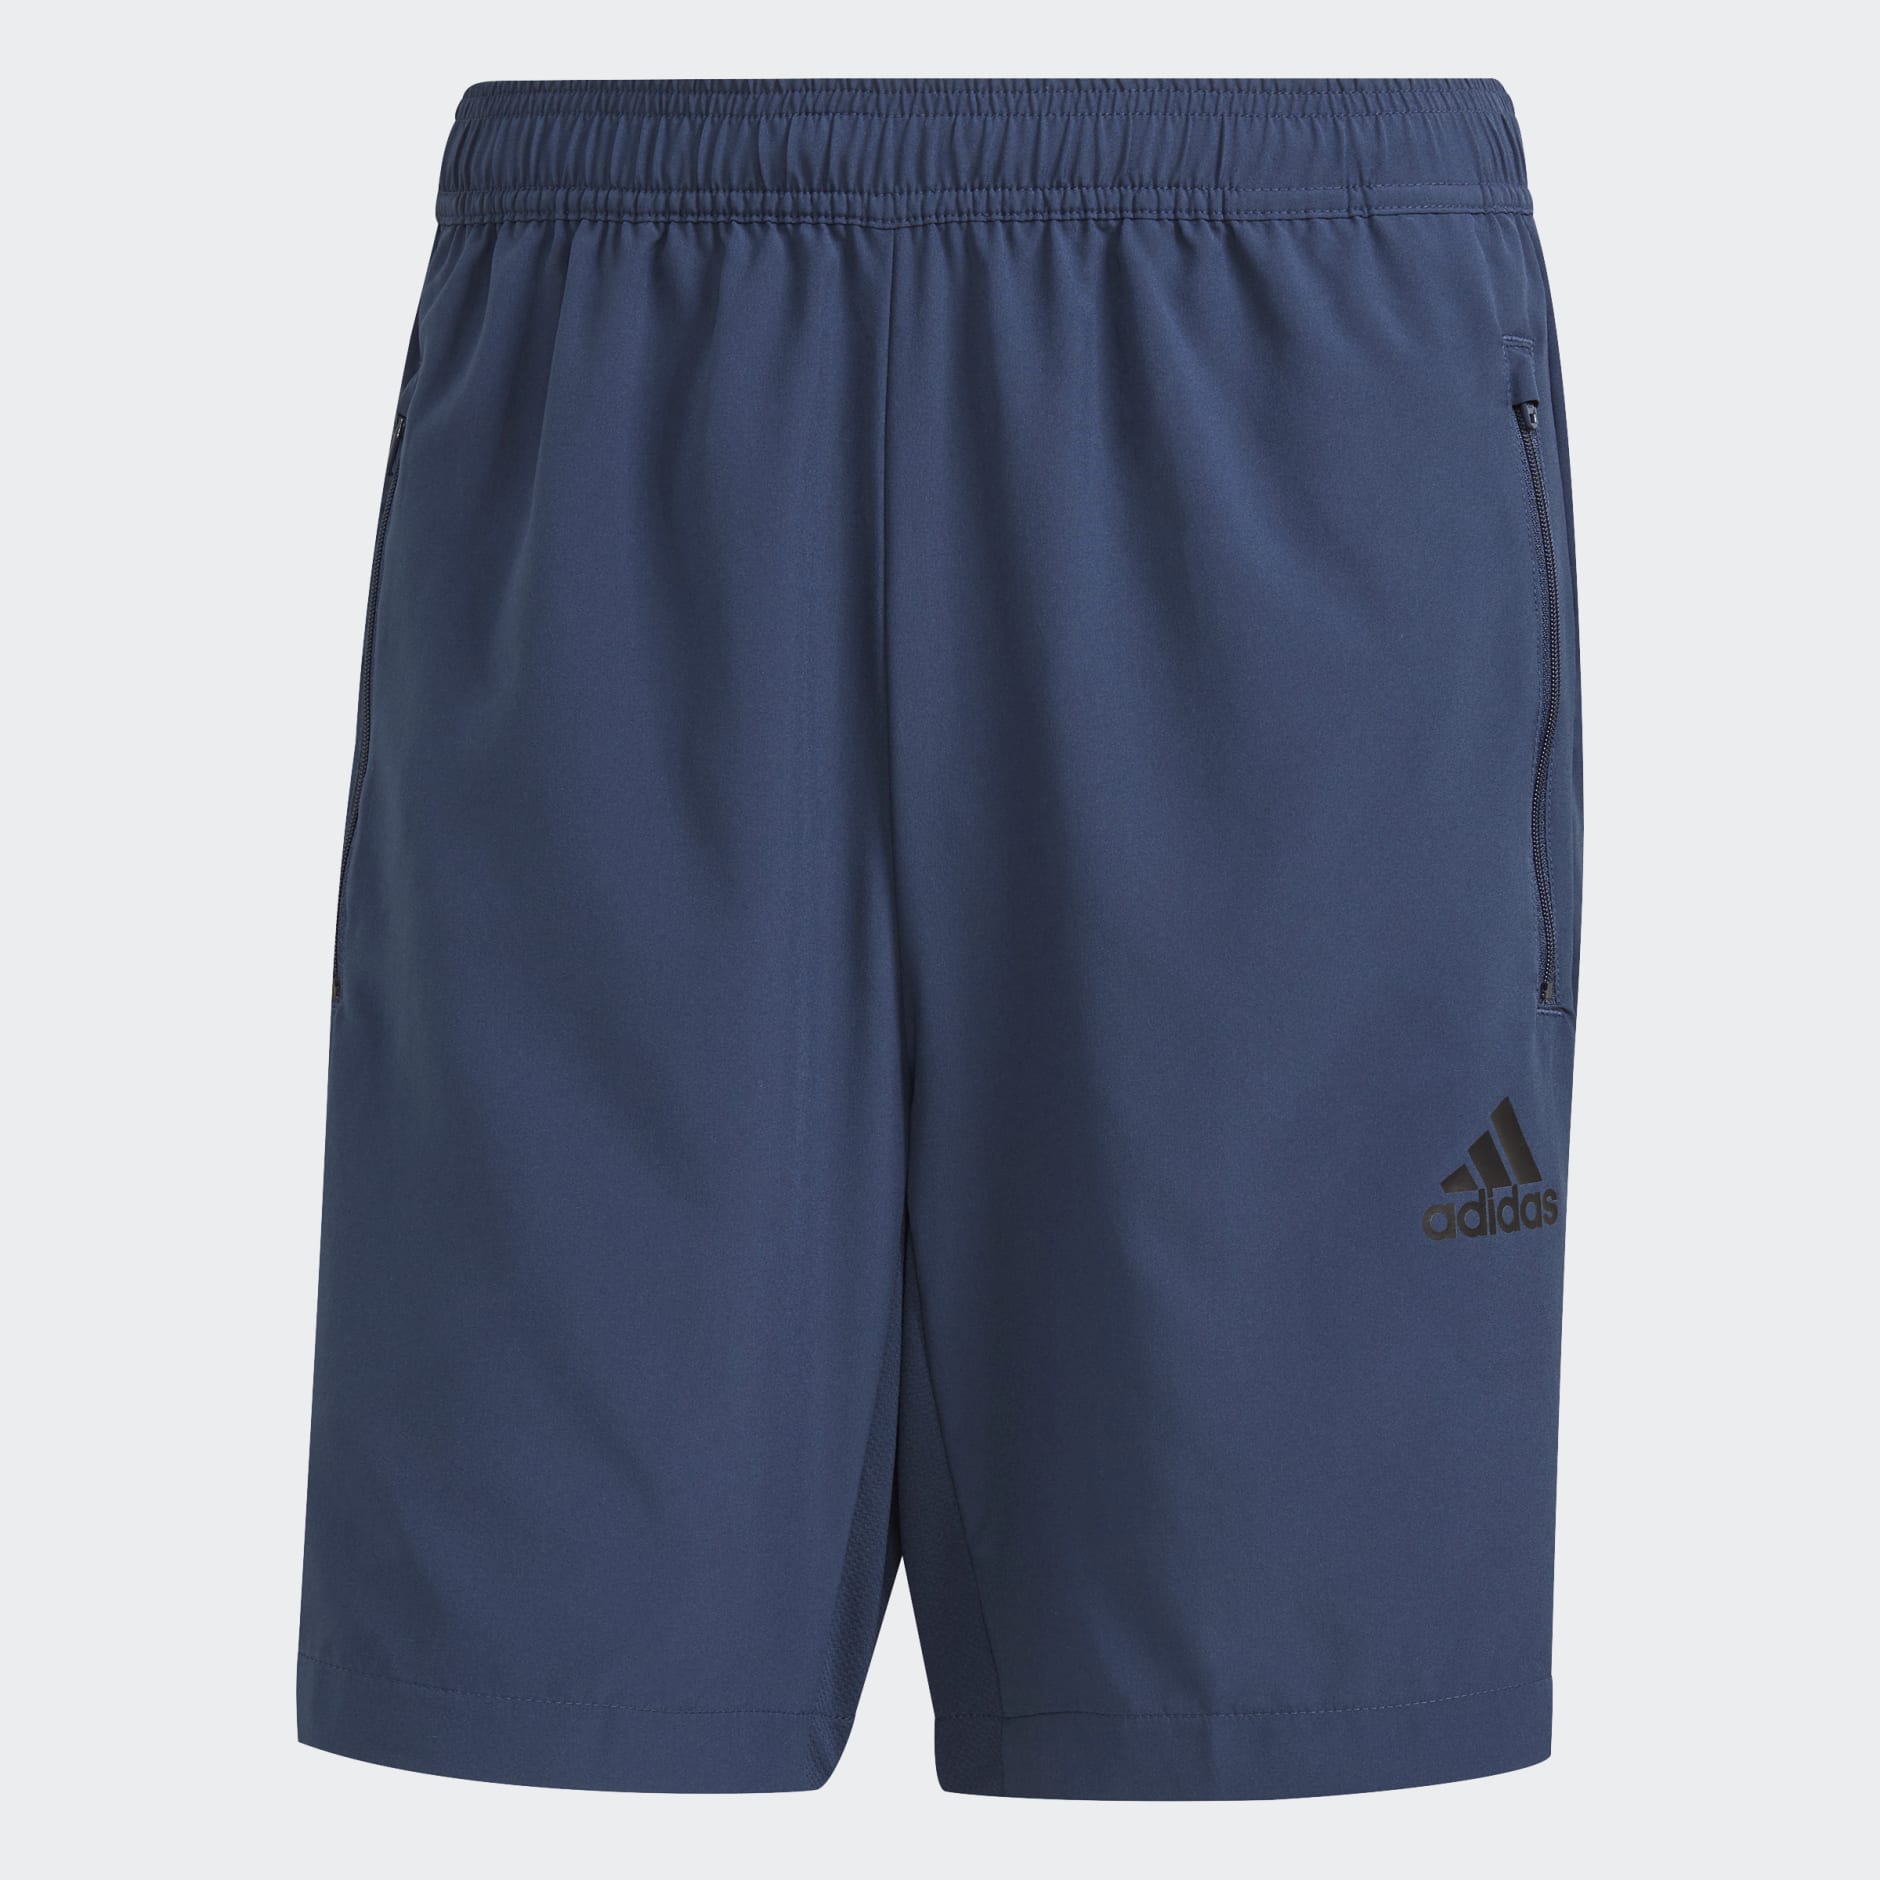 Men's Clothing - AEROREADY Designed to Move Woven Sport Shorts - Blue ...